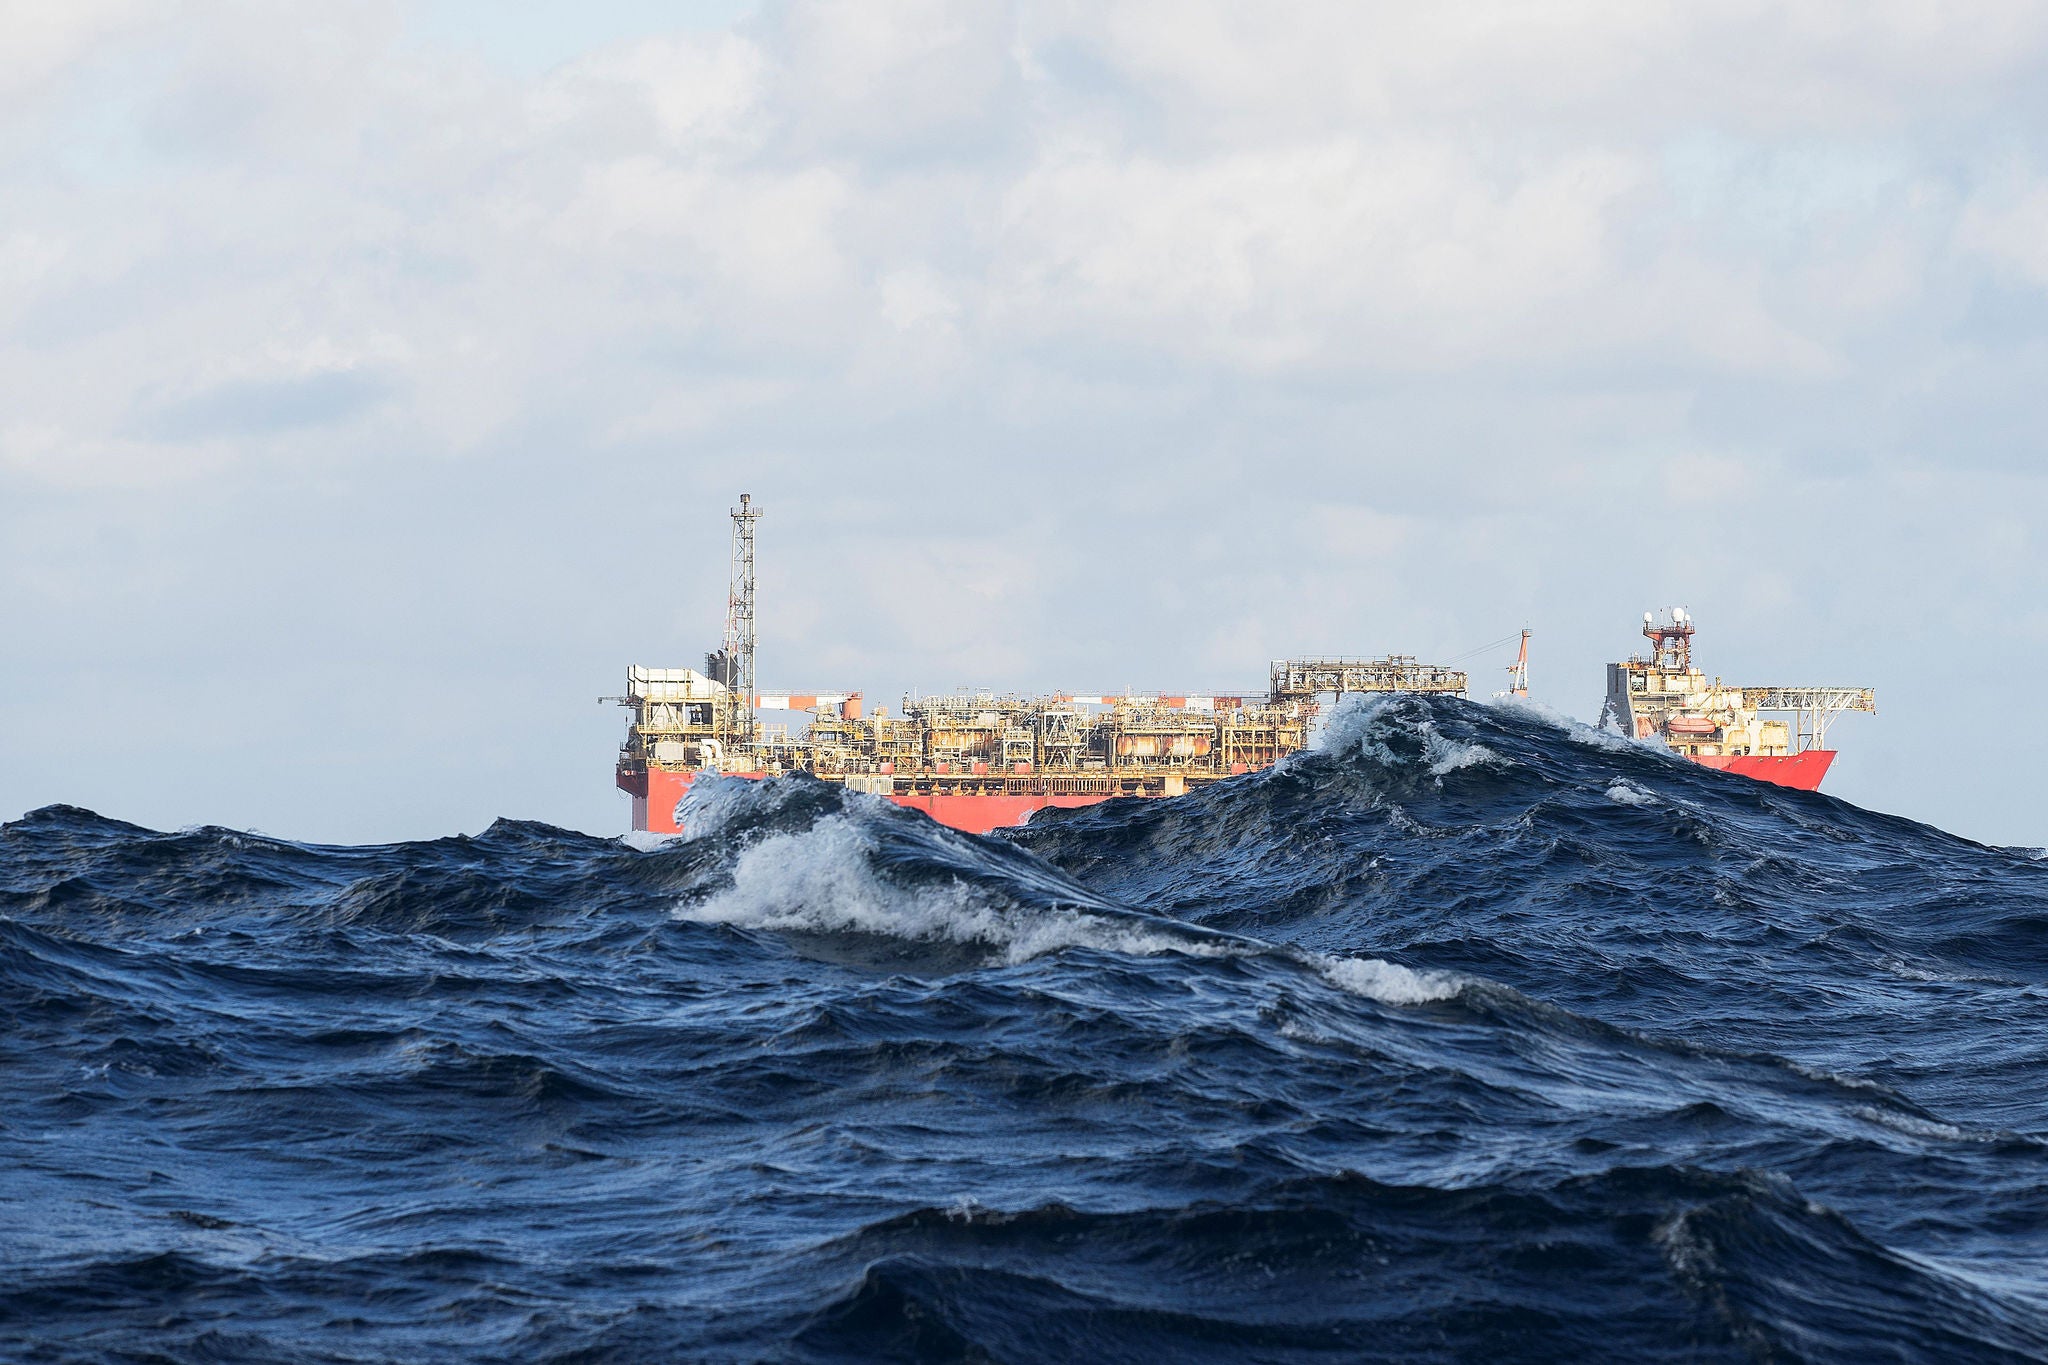 Offshore oil platform during rough sea